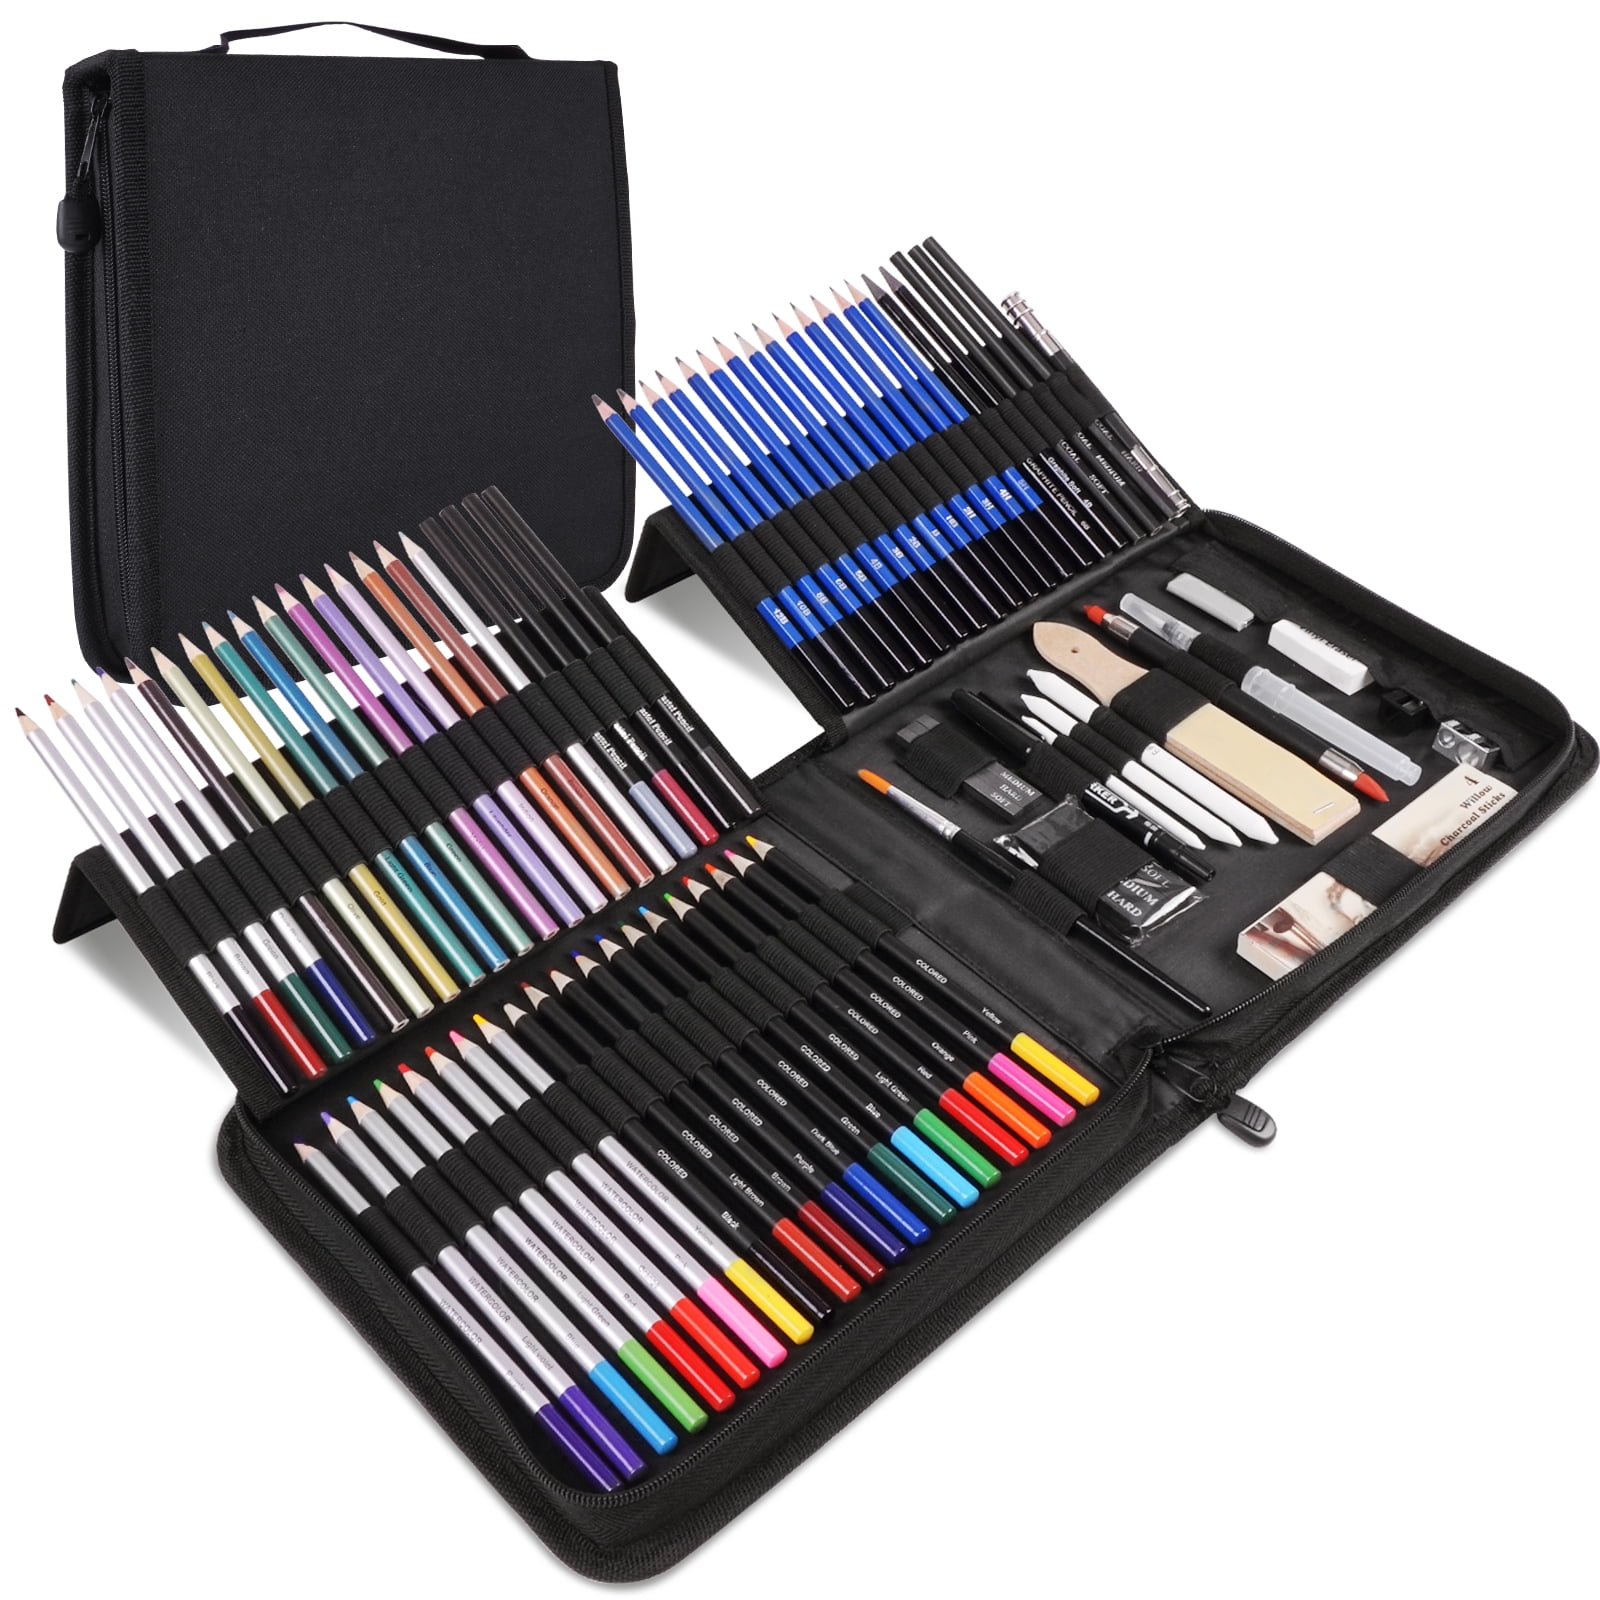 Art Supplies Drawing Supplies 84-Pack , Sketching Art Kit /Stuff Diverse  art Pencils, Ideal Gift for Beginners Professional Artists Teens Adults 